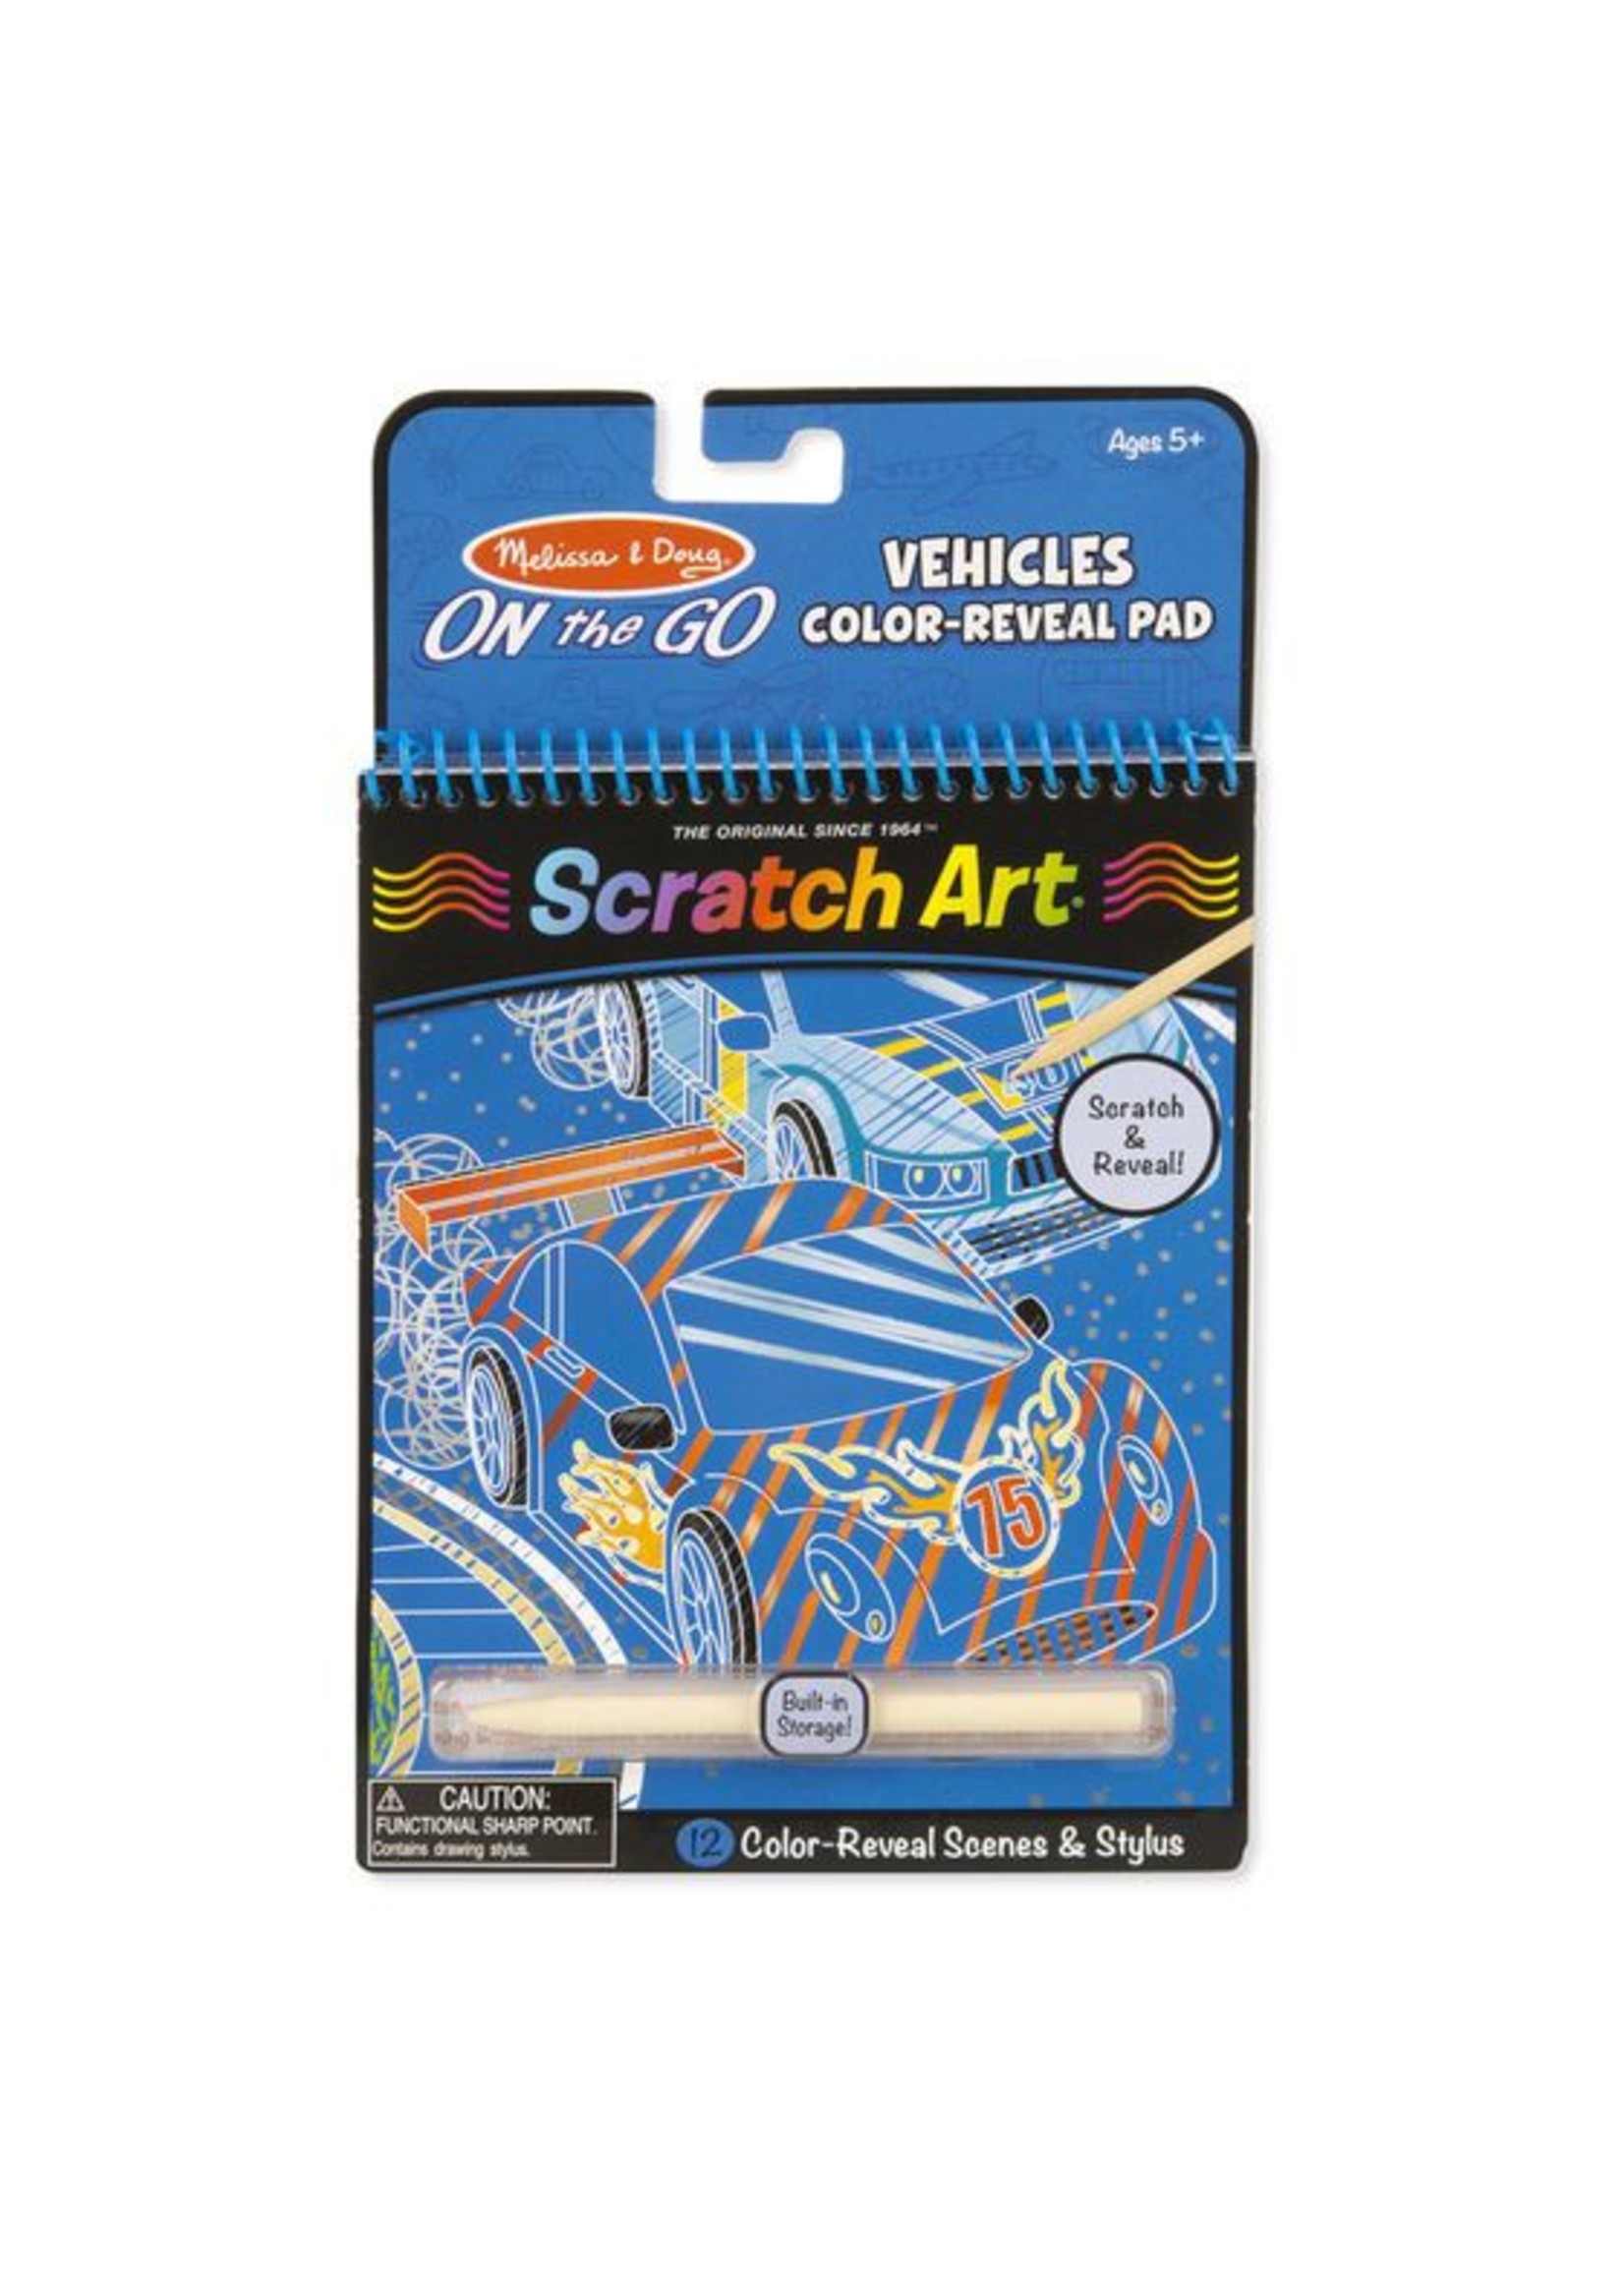 Melissa & Doug One the Go Scratch Art Vehicles Color-Reveal Pad